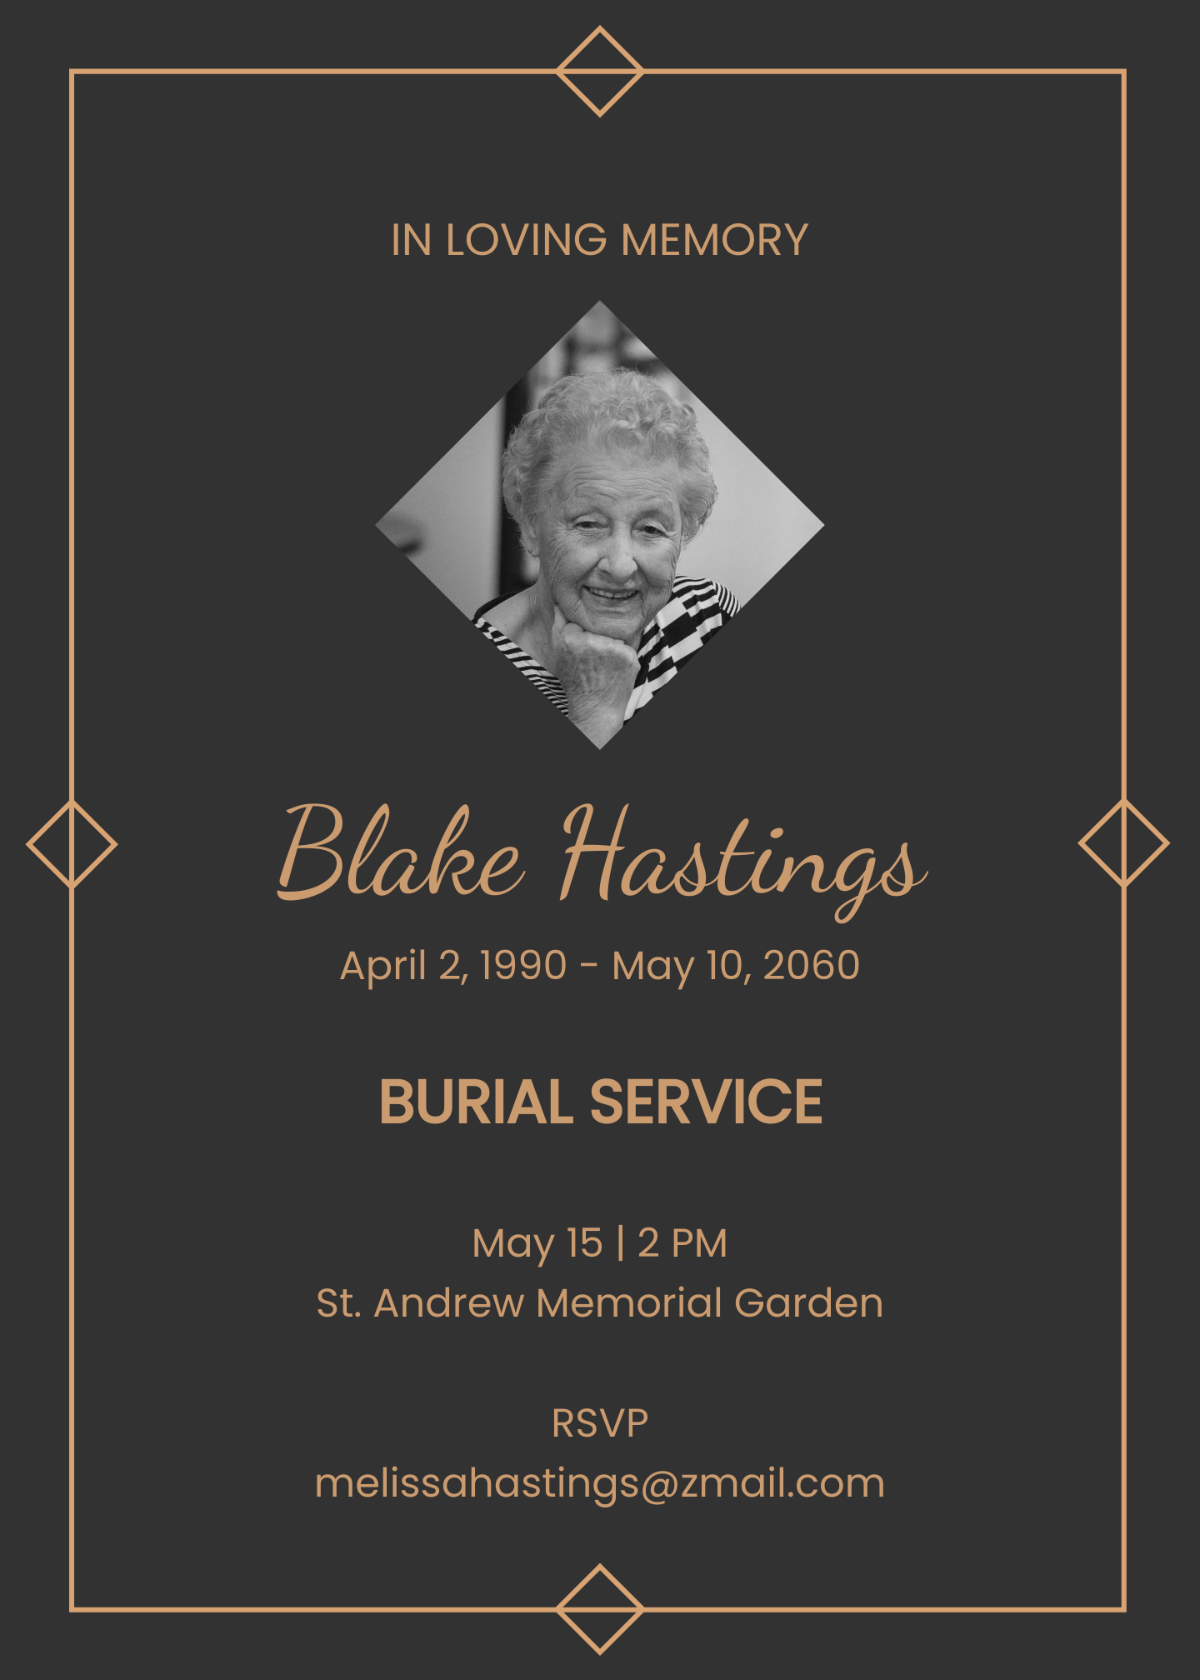 Funeral Burial Service Invitation Template